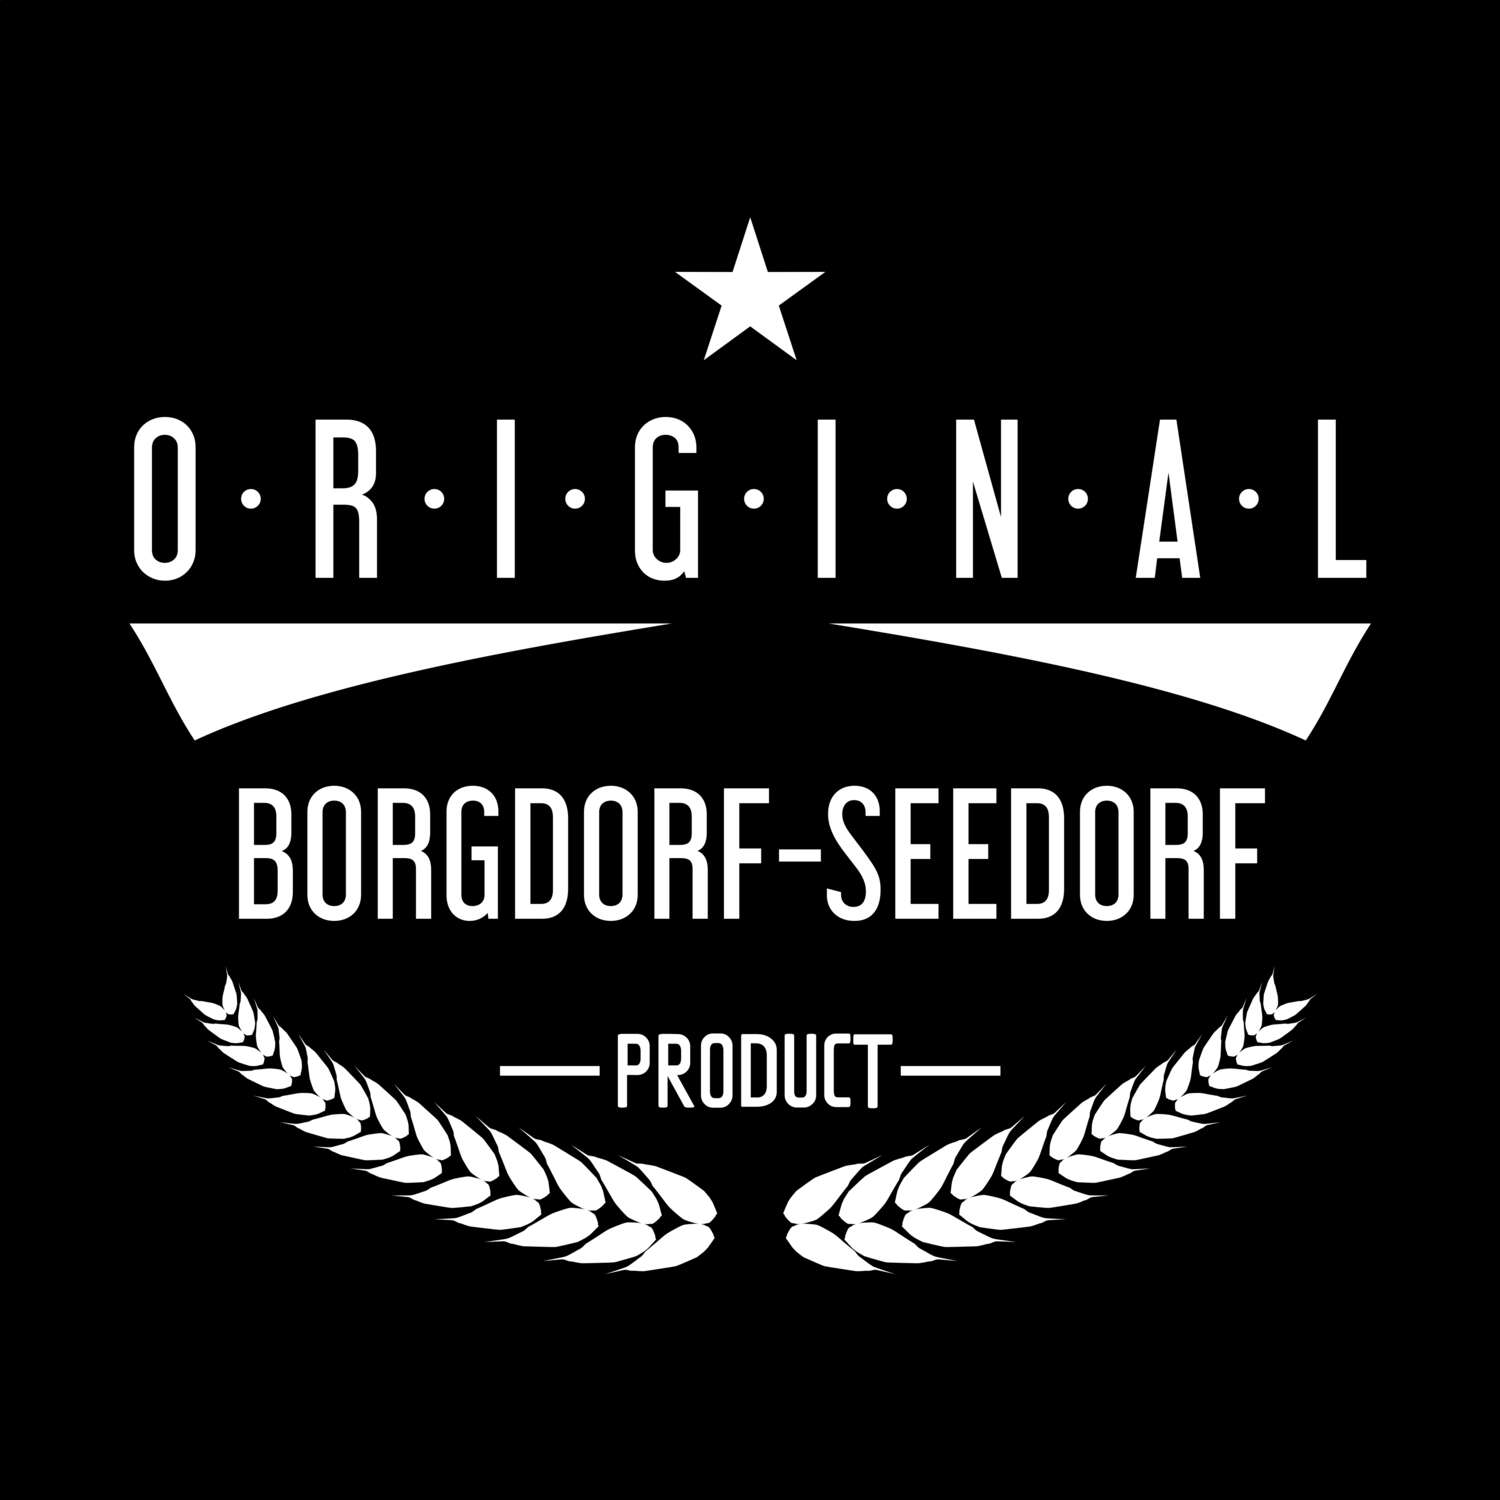 Borgdorf-Seedorf T-Shirt »Original Product«